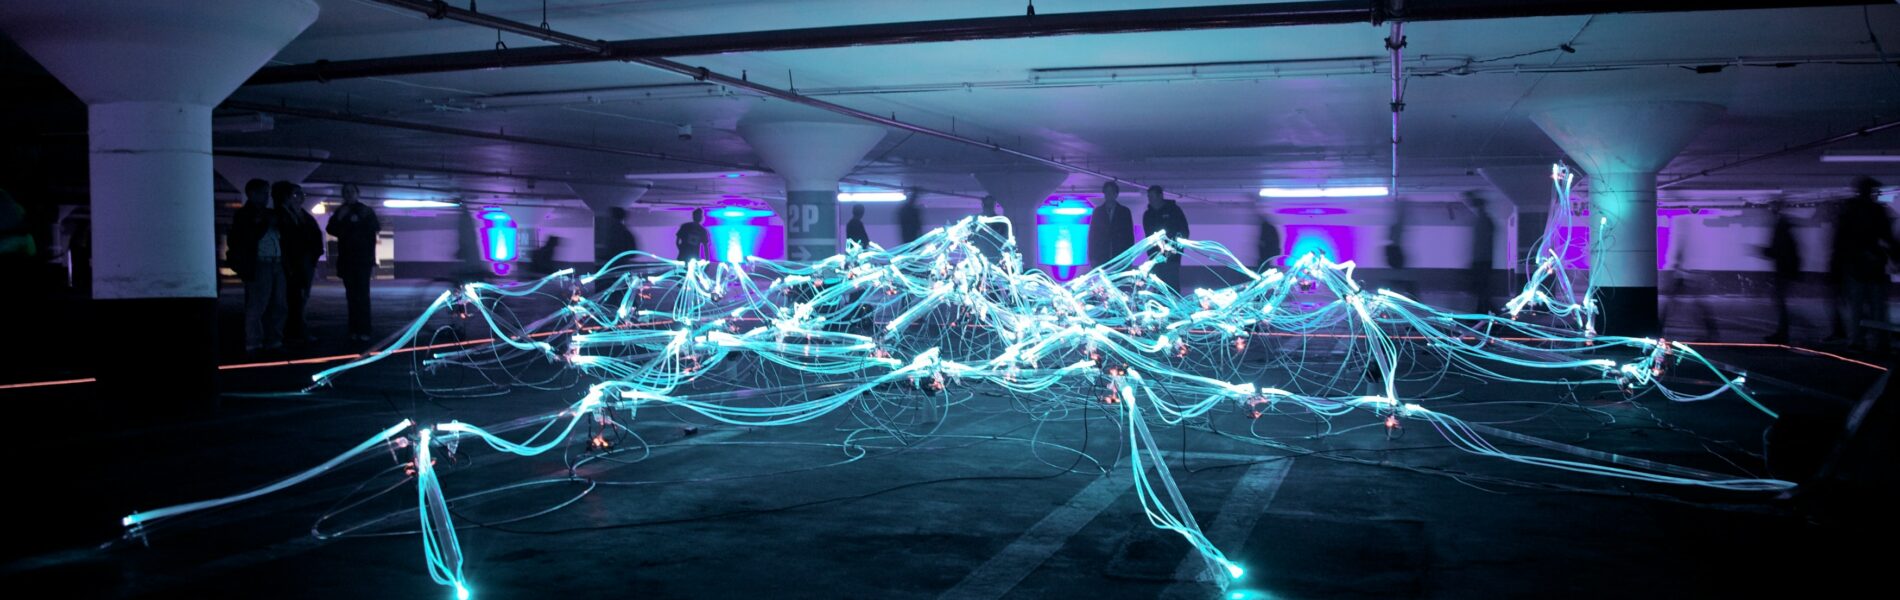 Room with blue fibre optics cables arranged like a web, lit up